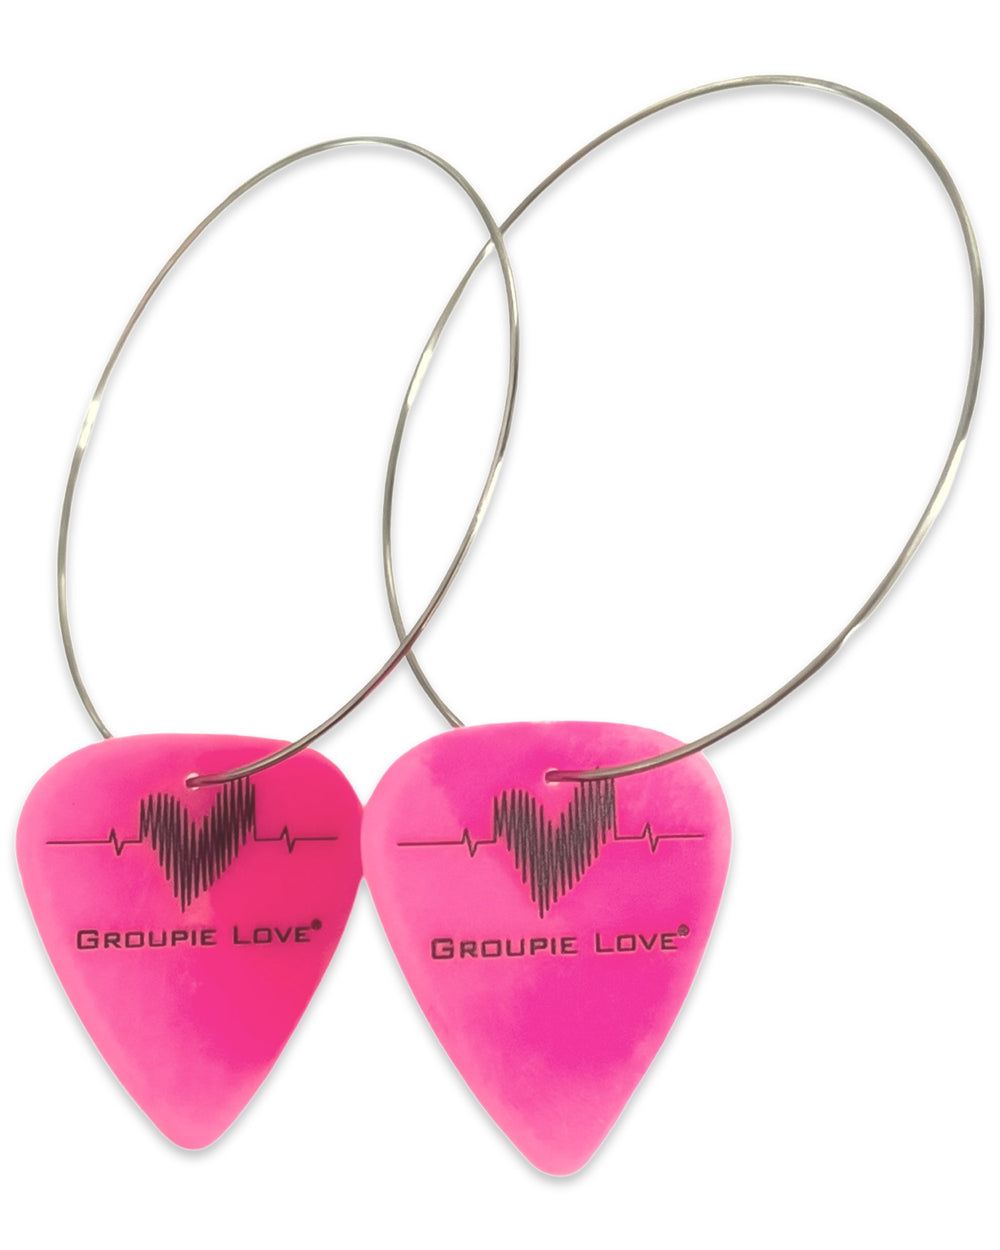 WS Groupie Love Neon Pink Single Guitar Pick Earrings